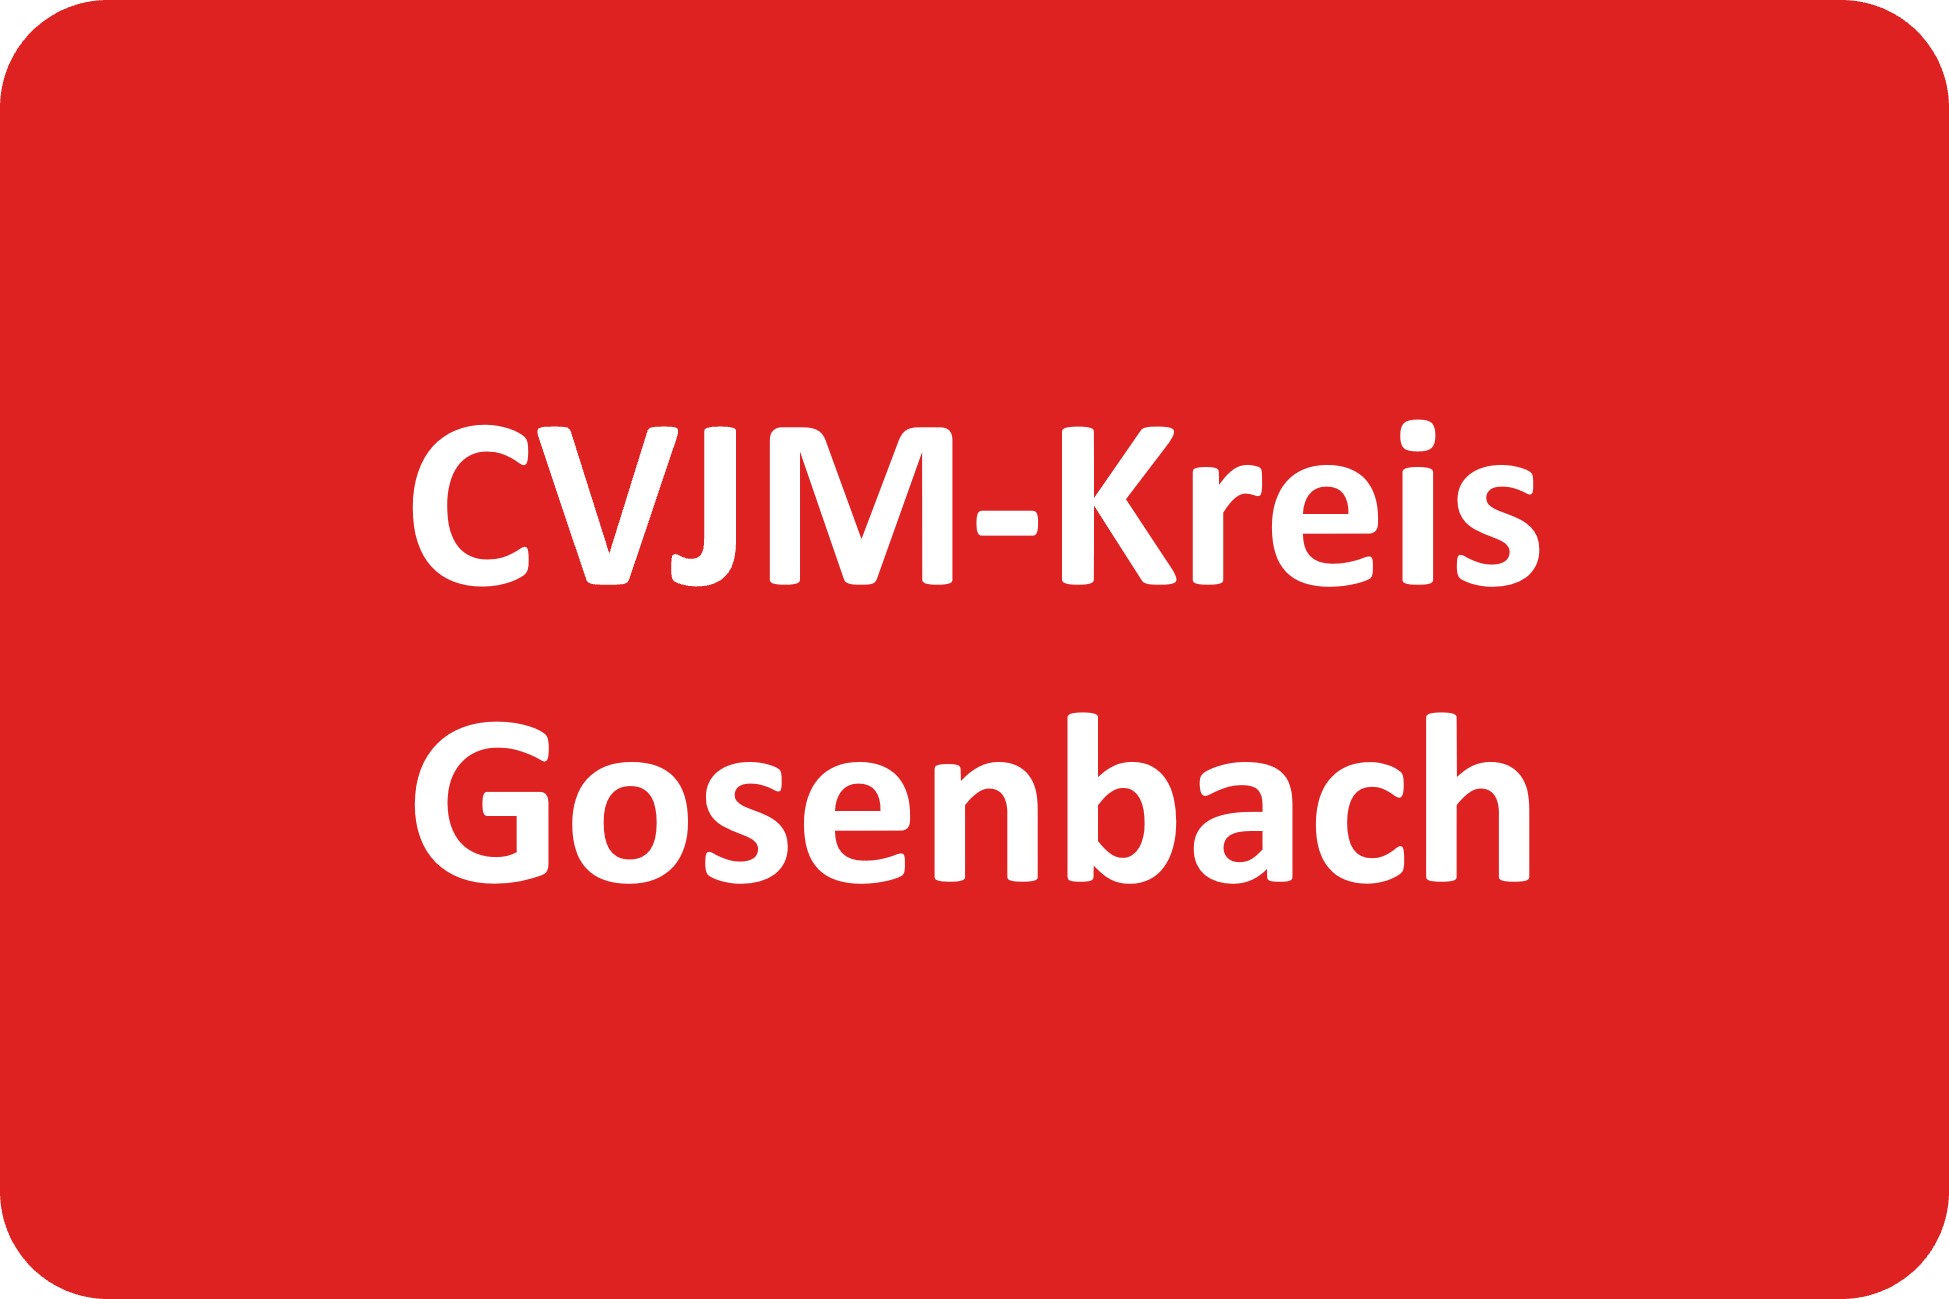 CVJM Kreis Gosenbach